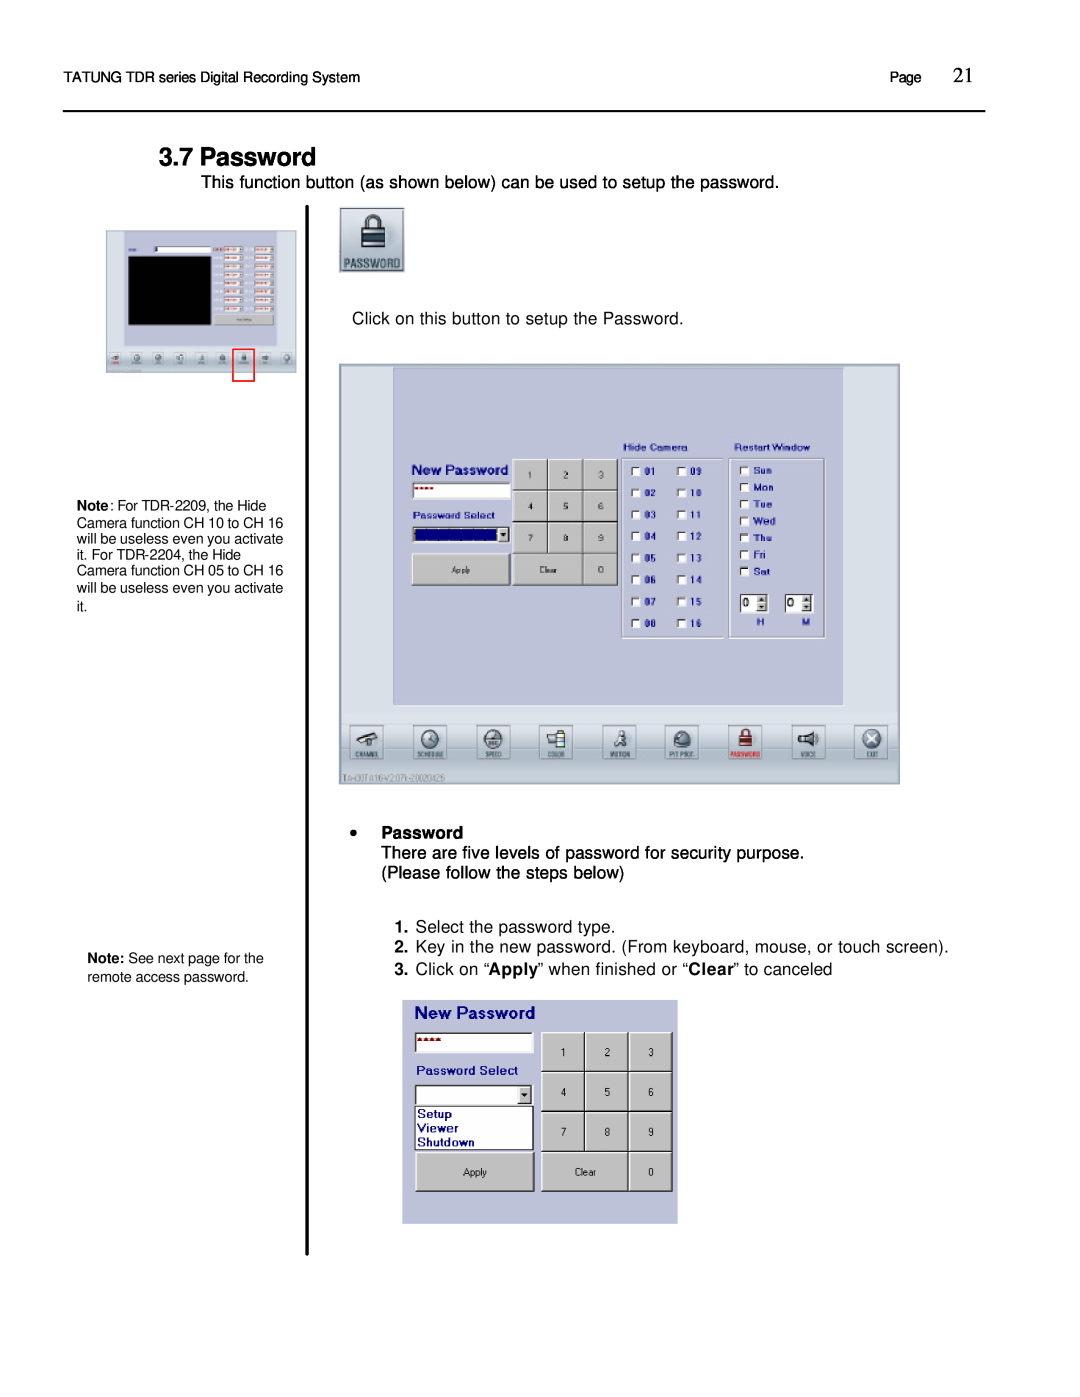 Tatung TDR-22XX operation manual ∙ Password 